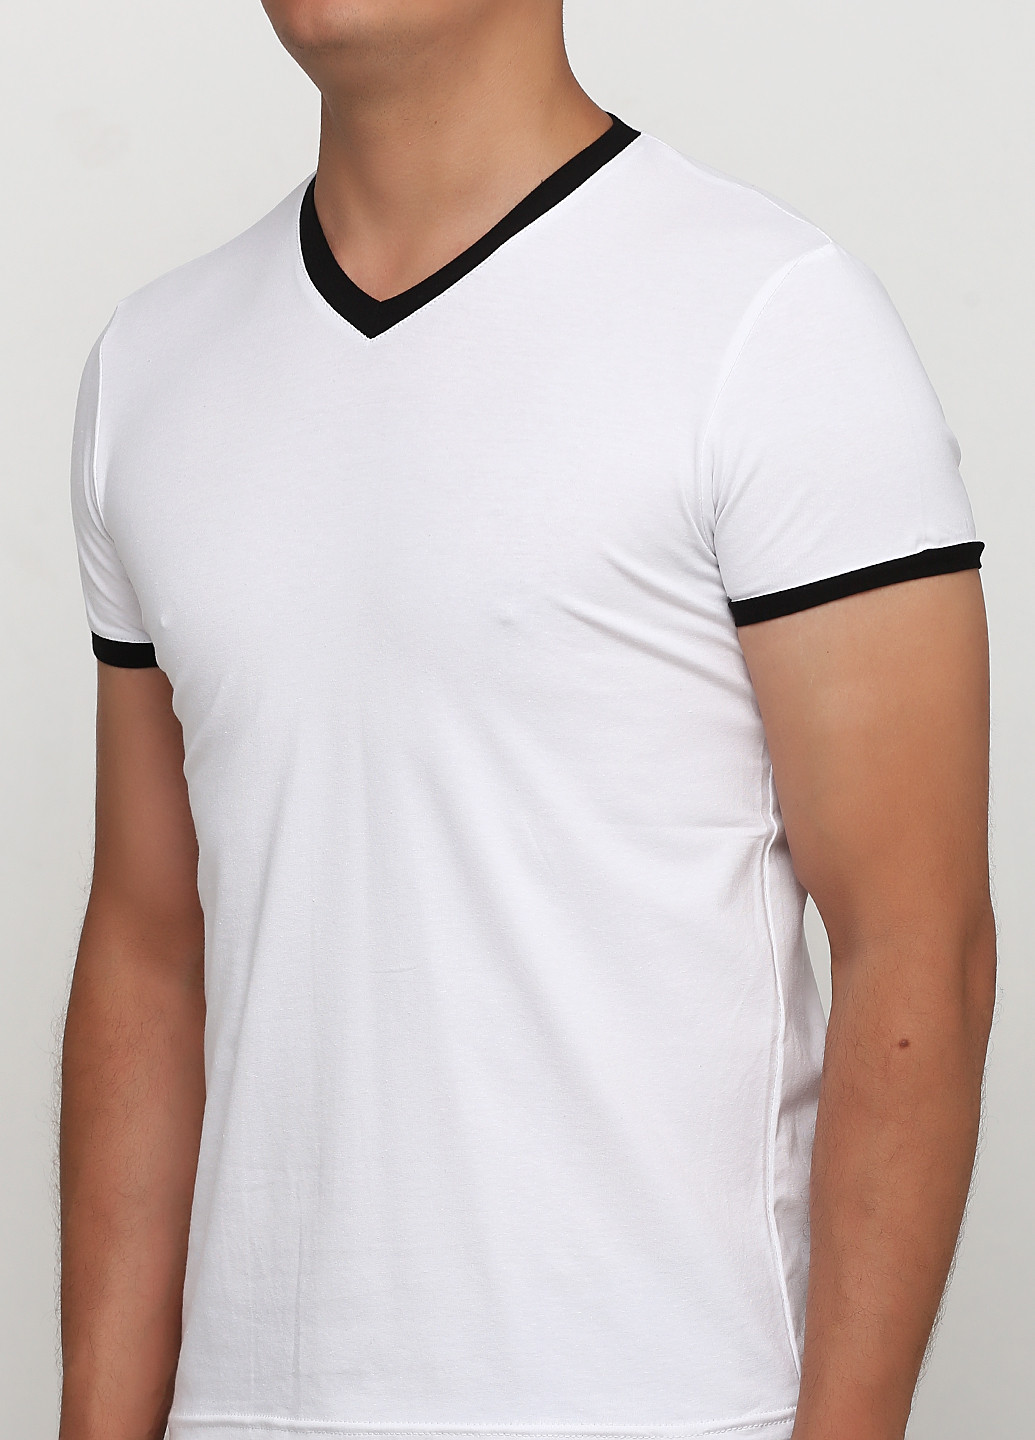 Белая футболка SPORT colleclion